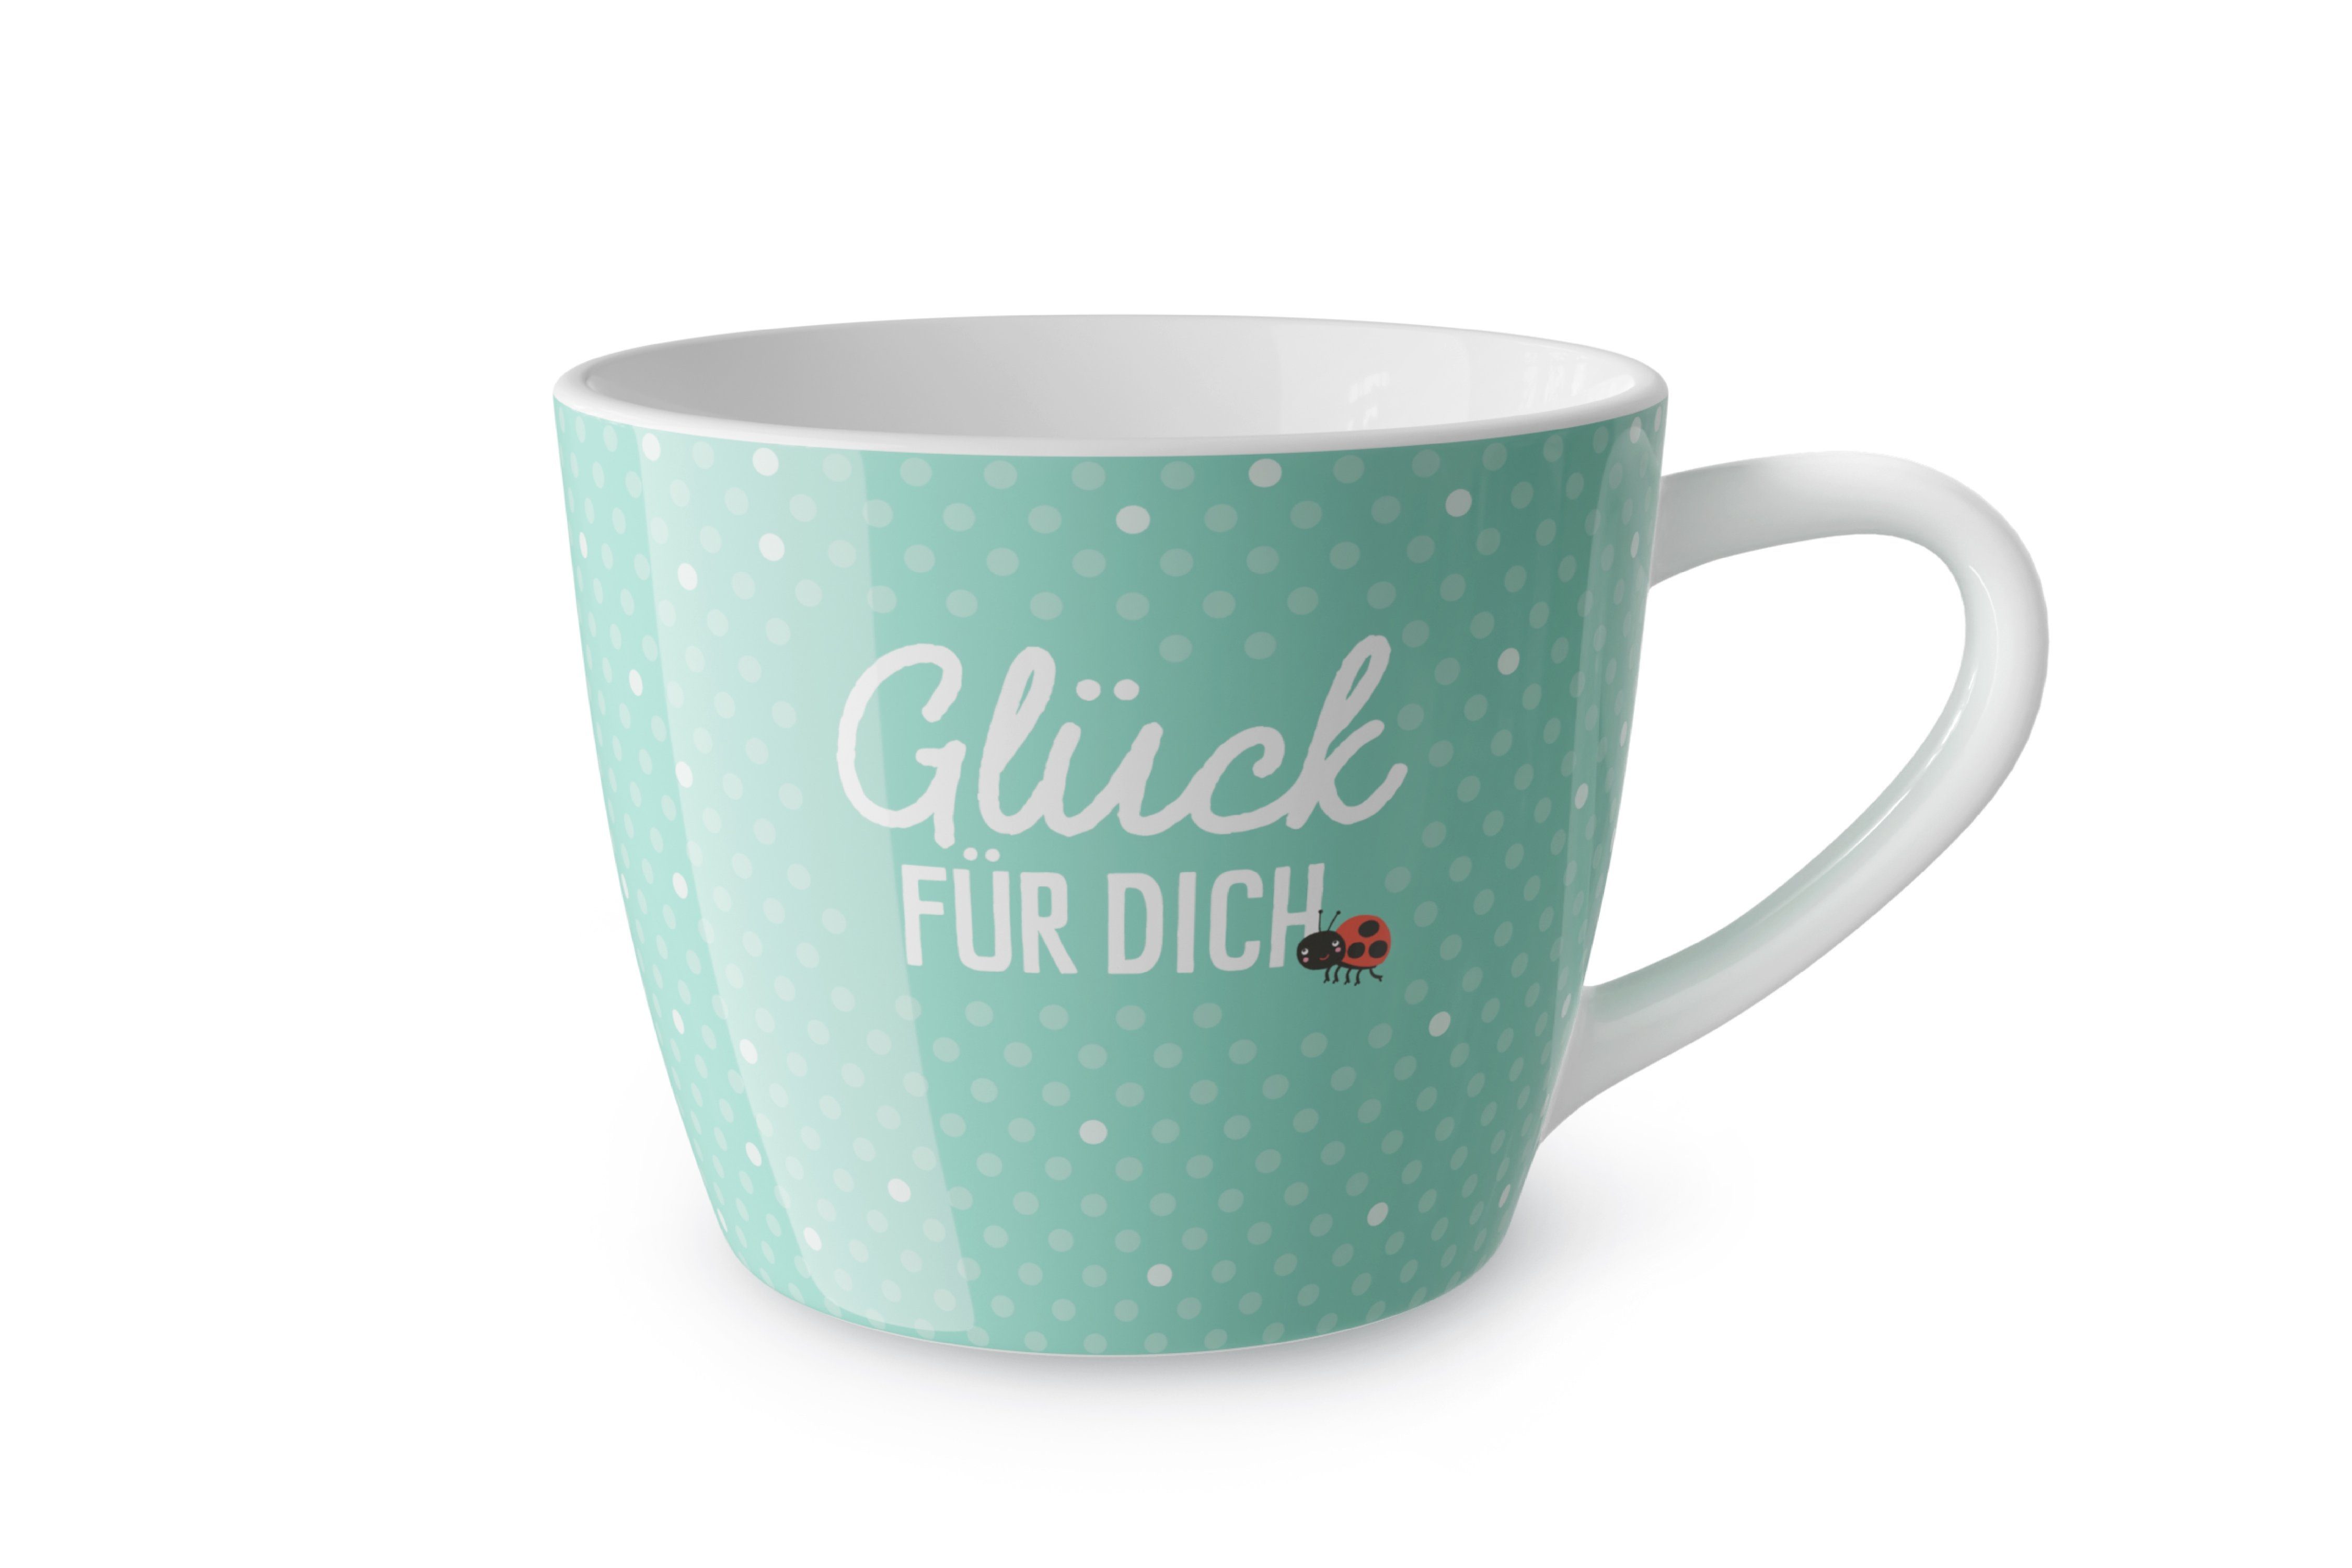 La Vida Tasse Kaffeetasse Teetasse Tasse Maxi Becher für dich la vida "Glück für, Material: Porzellan